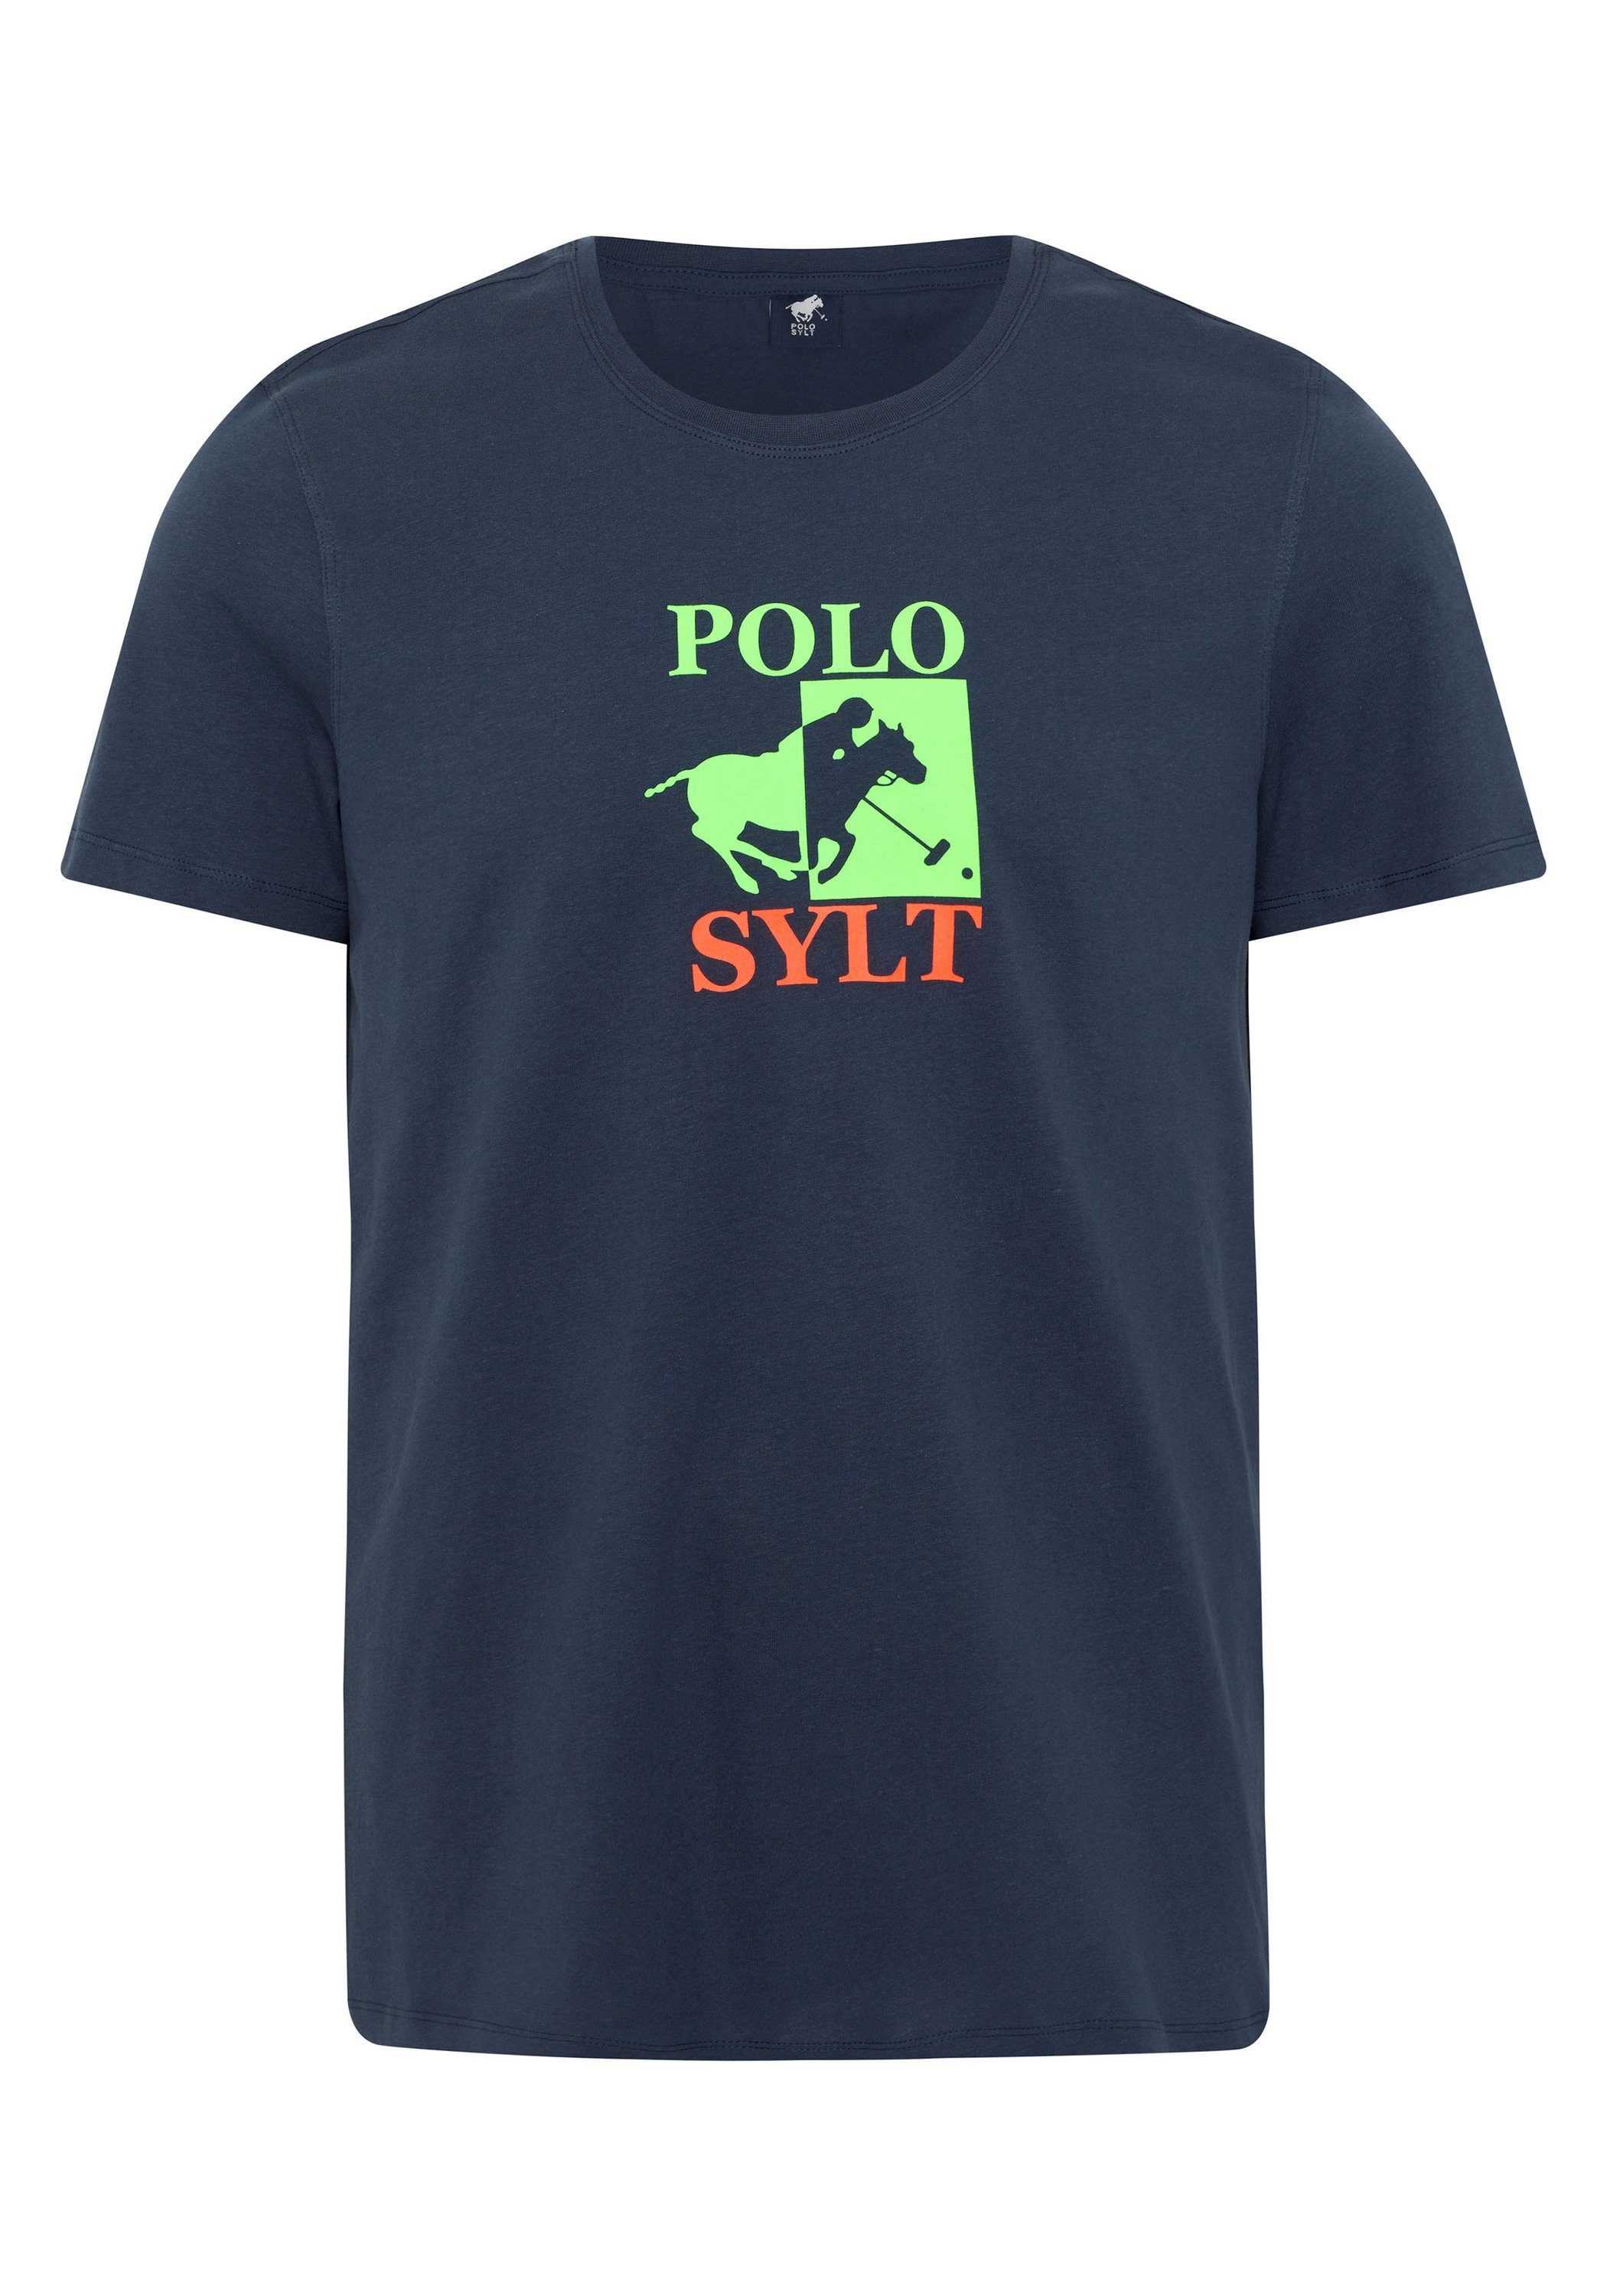 Polo Sylt Print-Shirt mit großem Logoprint 19-4010 Total Eclipse